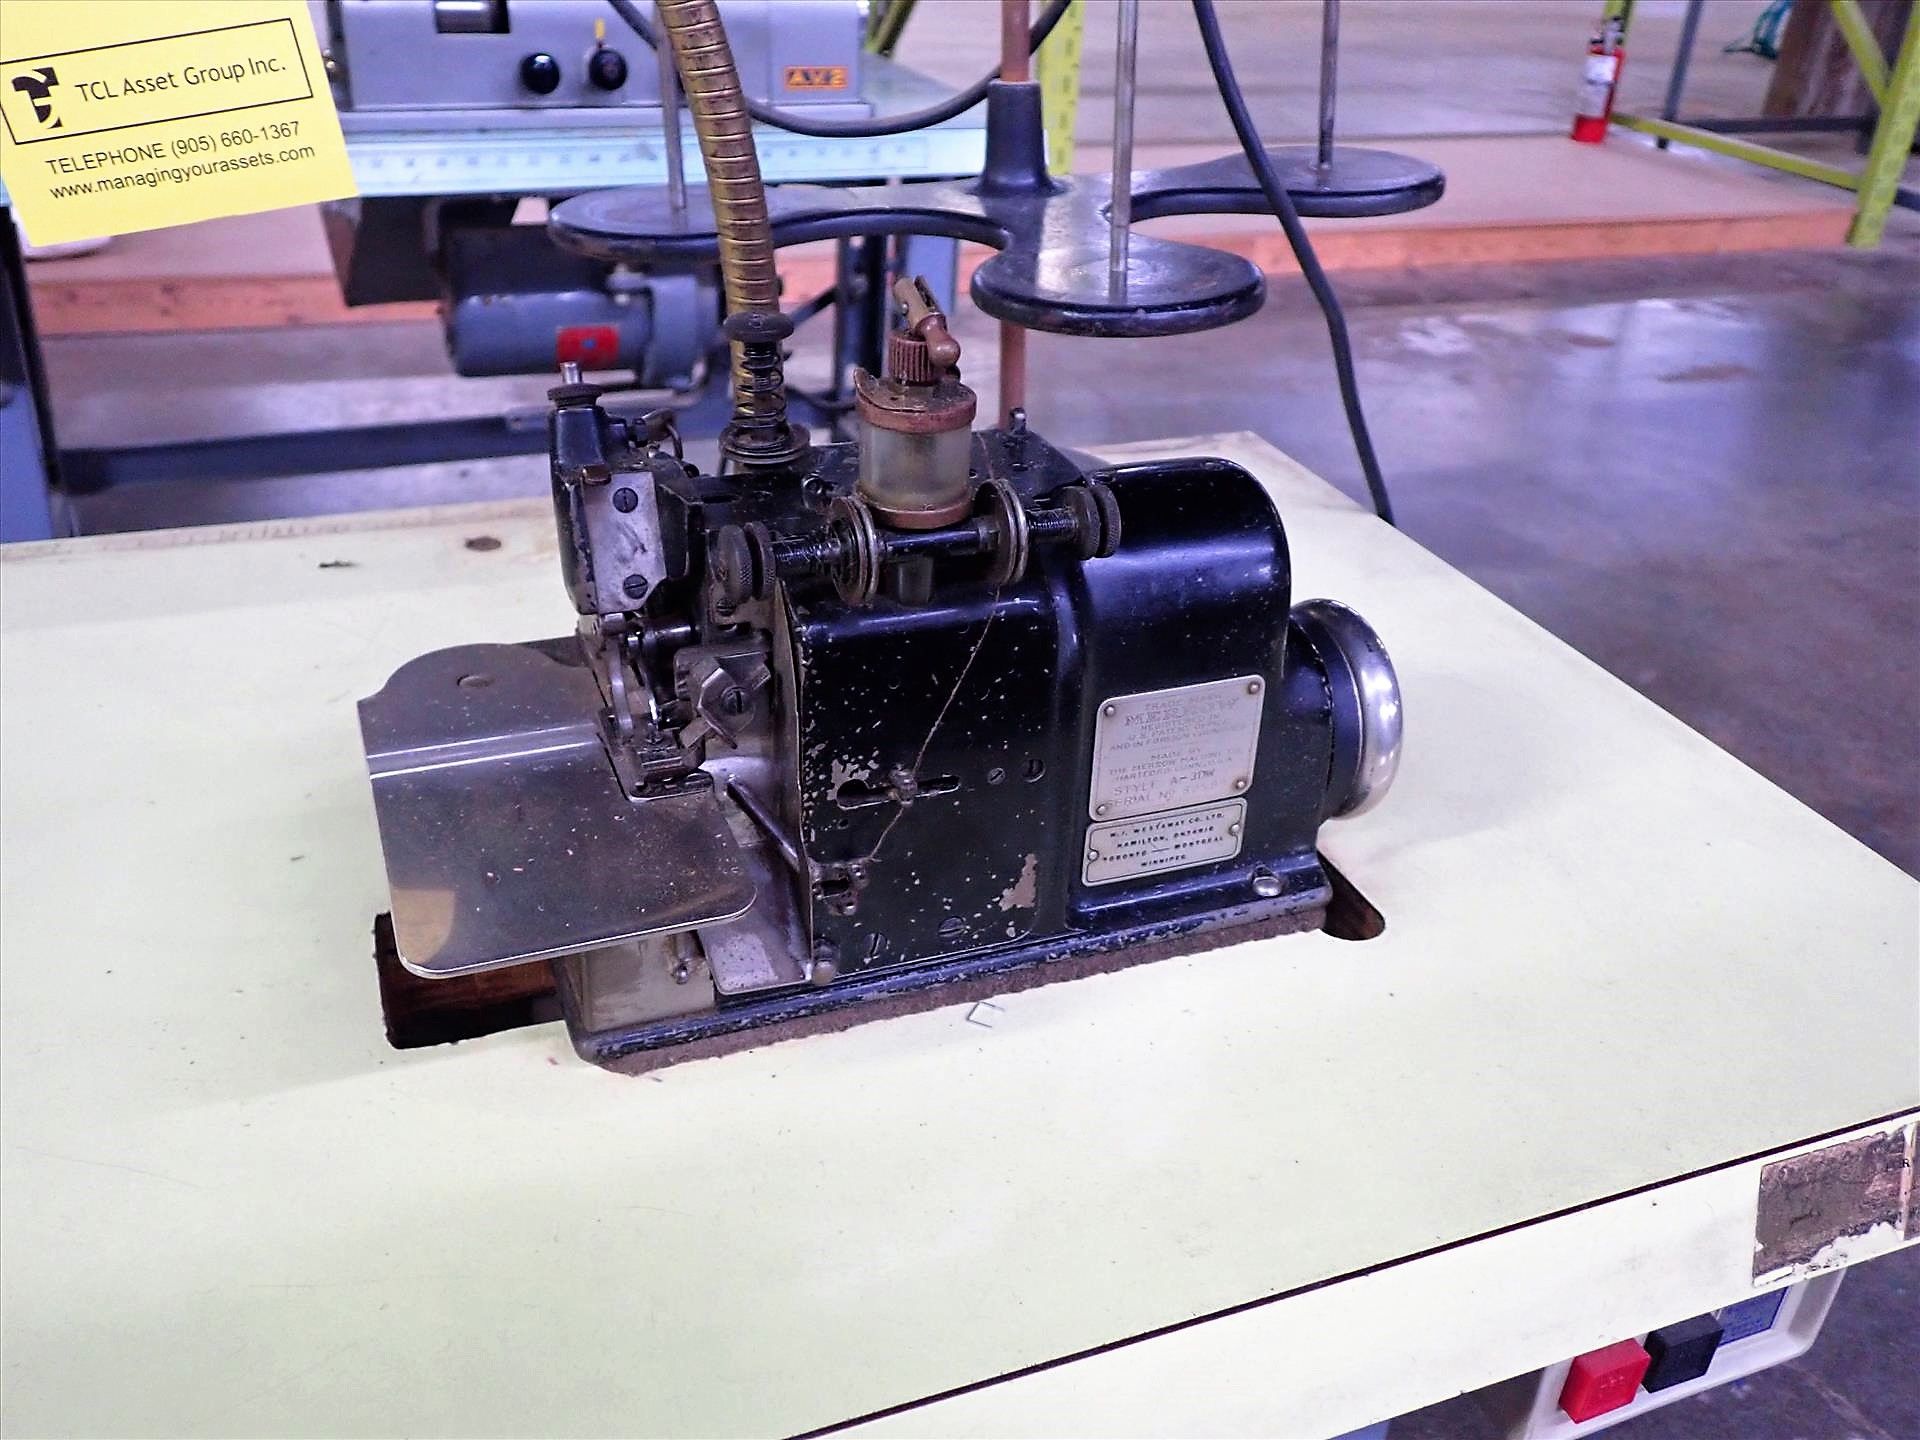 Merrow industrial overlock sewing machine, mod. A-3DW, S/N 88589 c/w 20 in. x 48 in. industrial